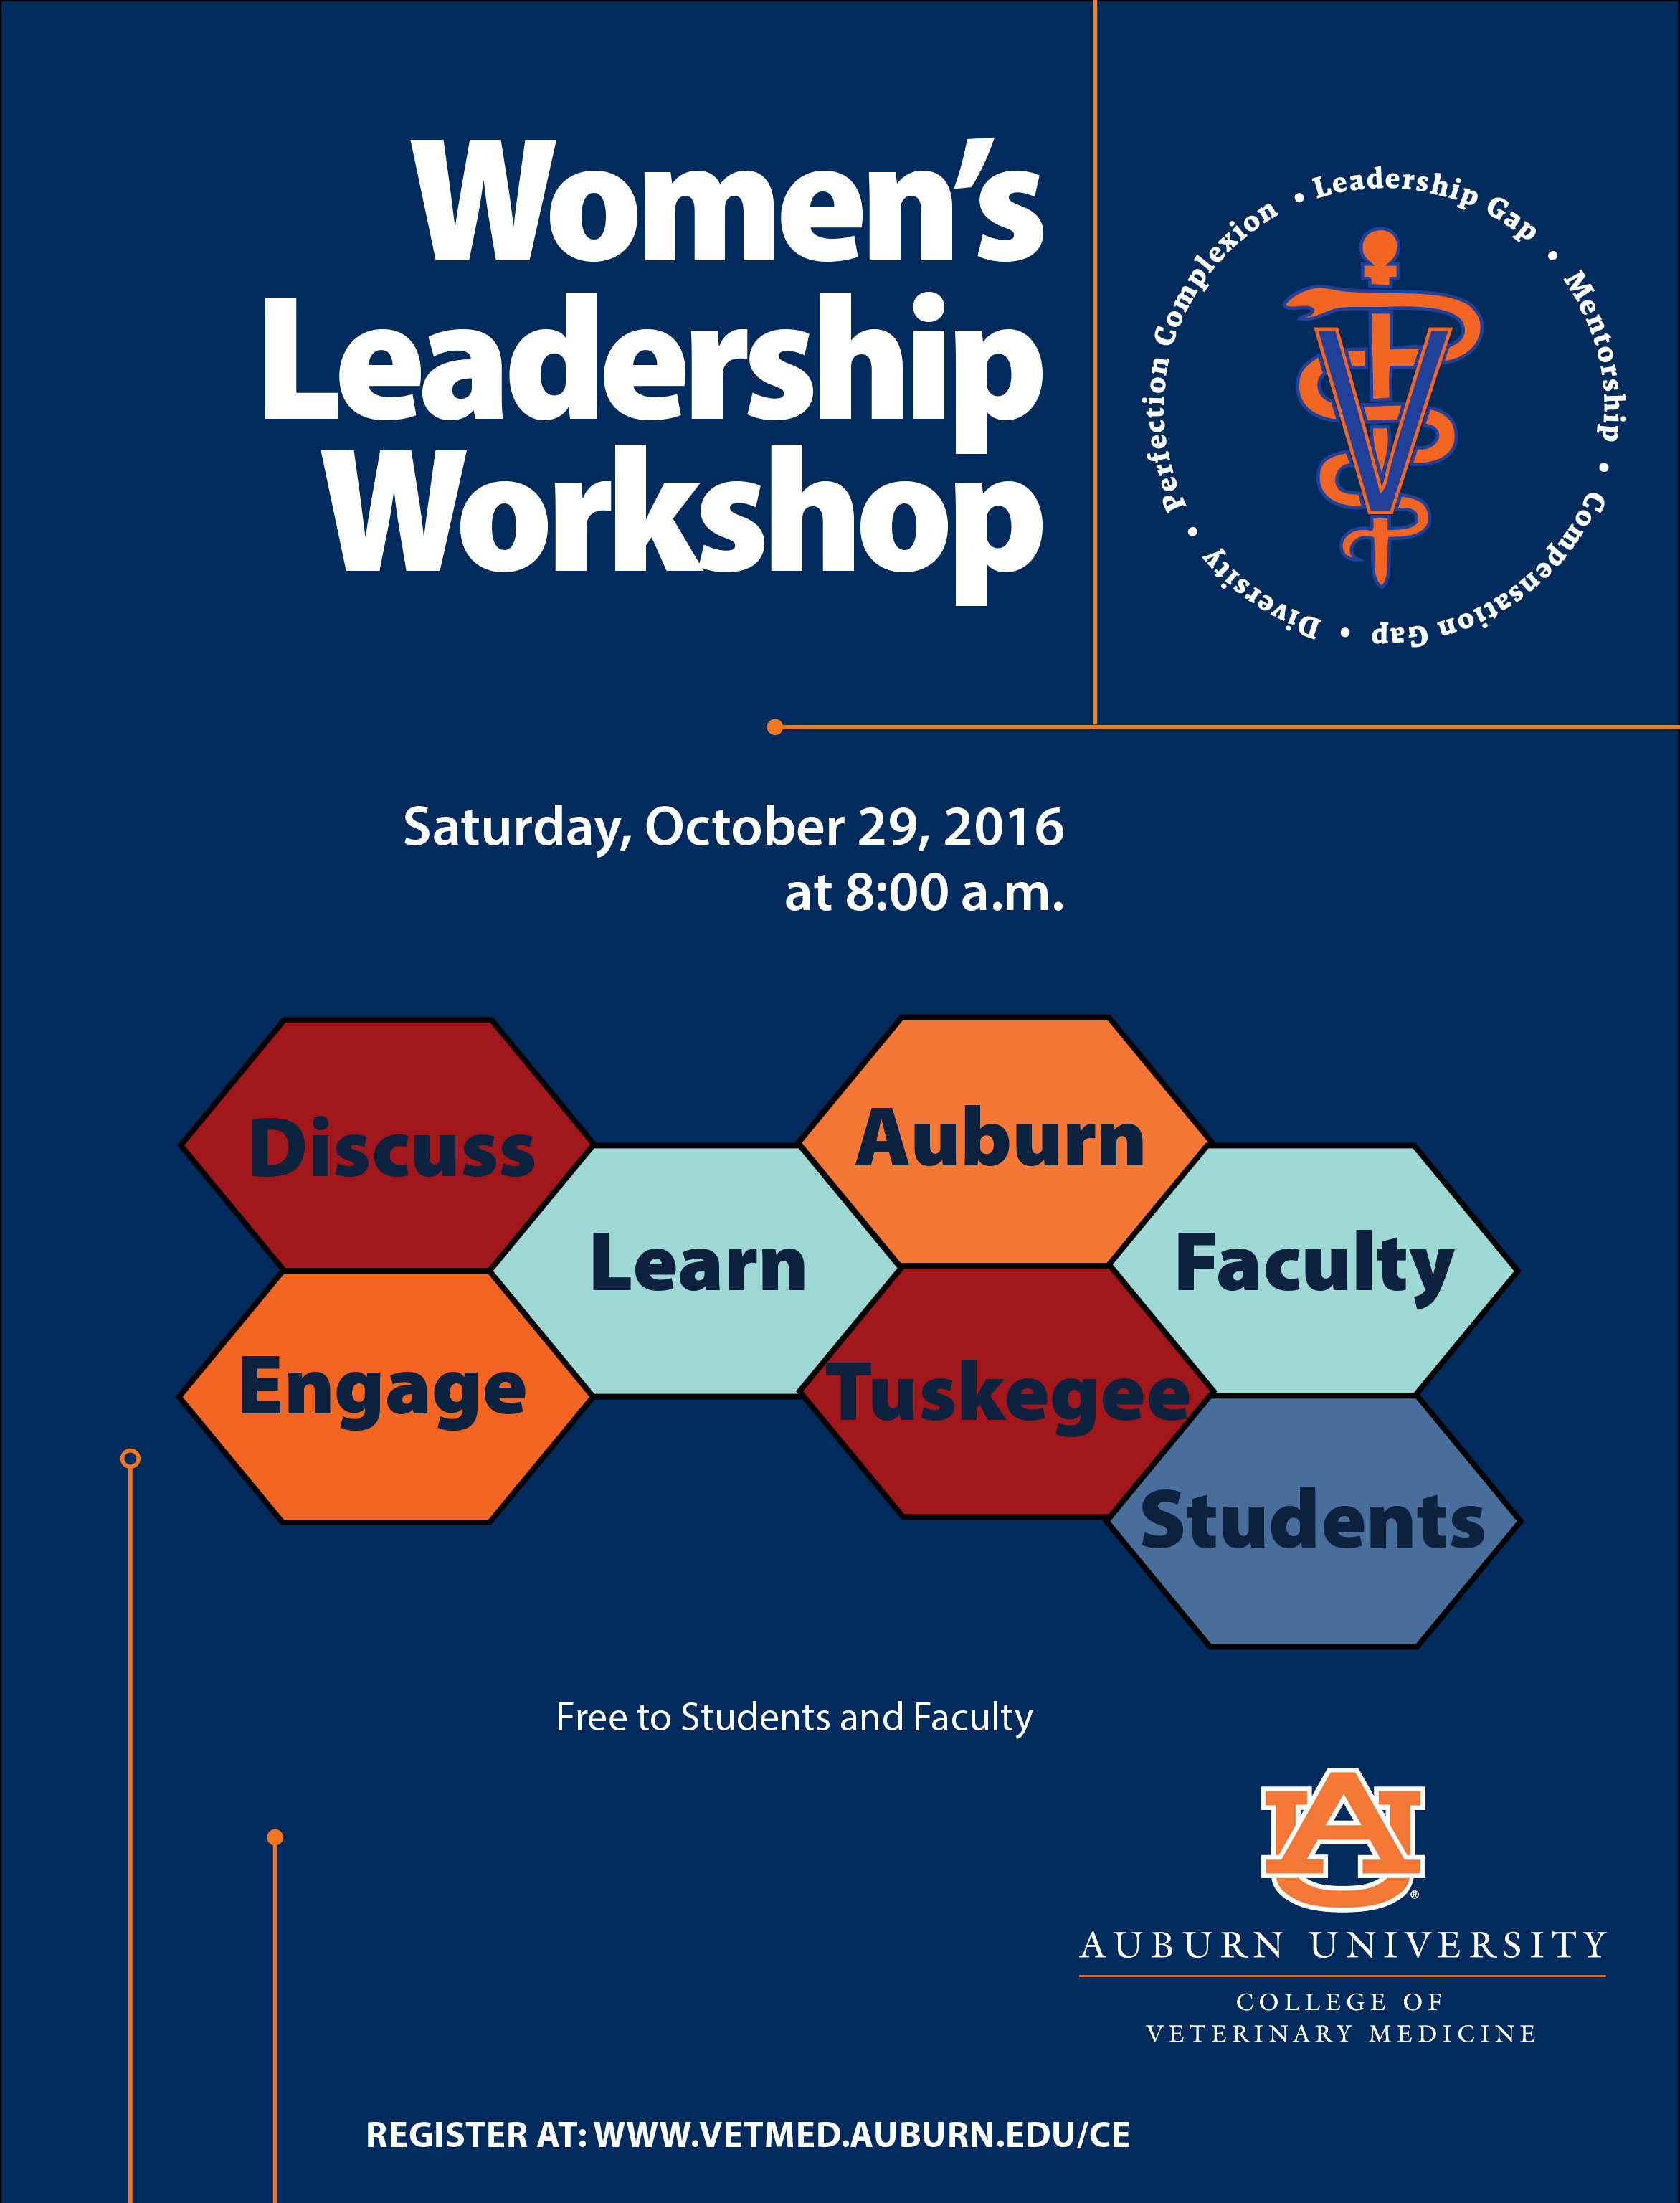 Women's Leadership Workshop. Saturday, October 29, 2016 at 8:00 a.m. Register at www.vetmed.auburn.edu/ce